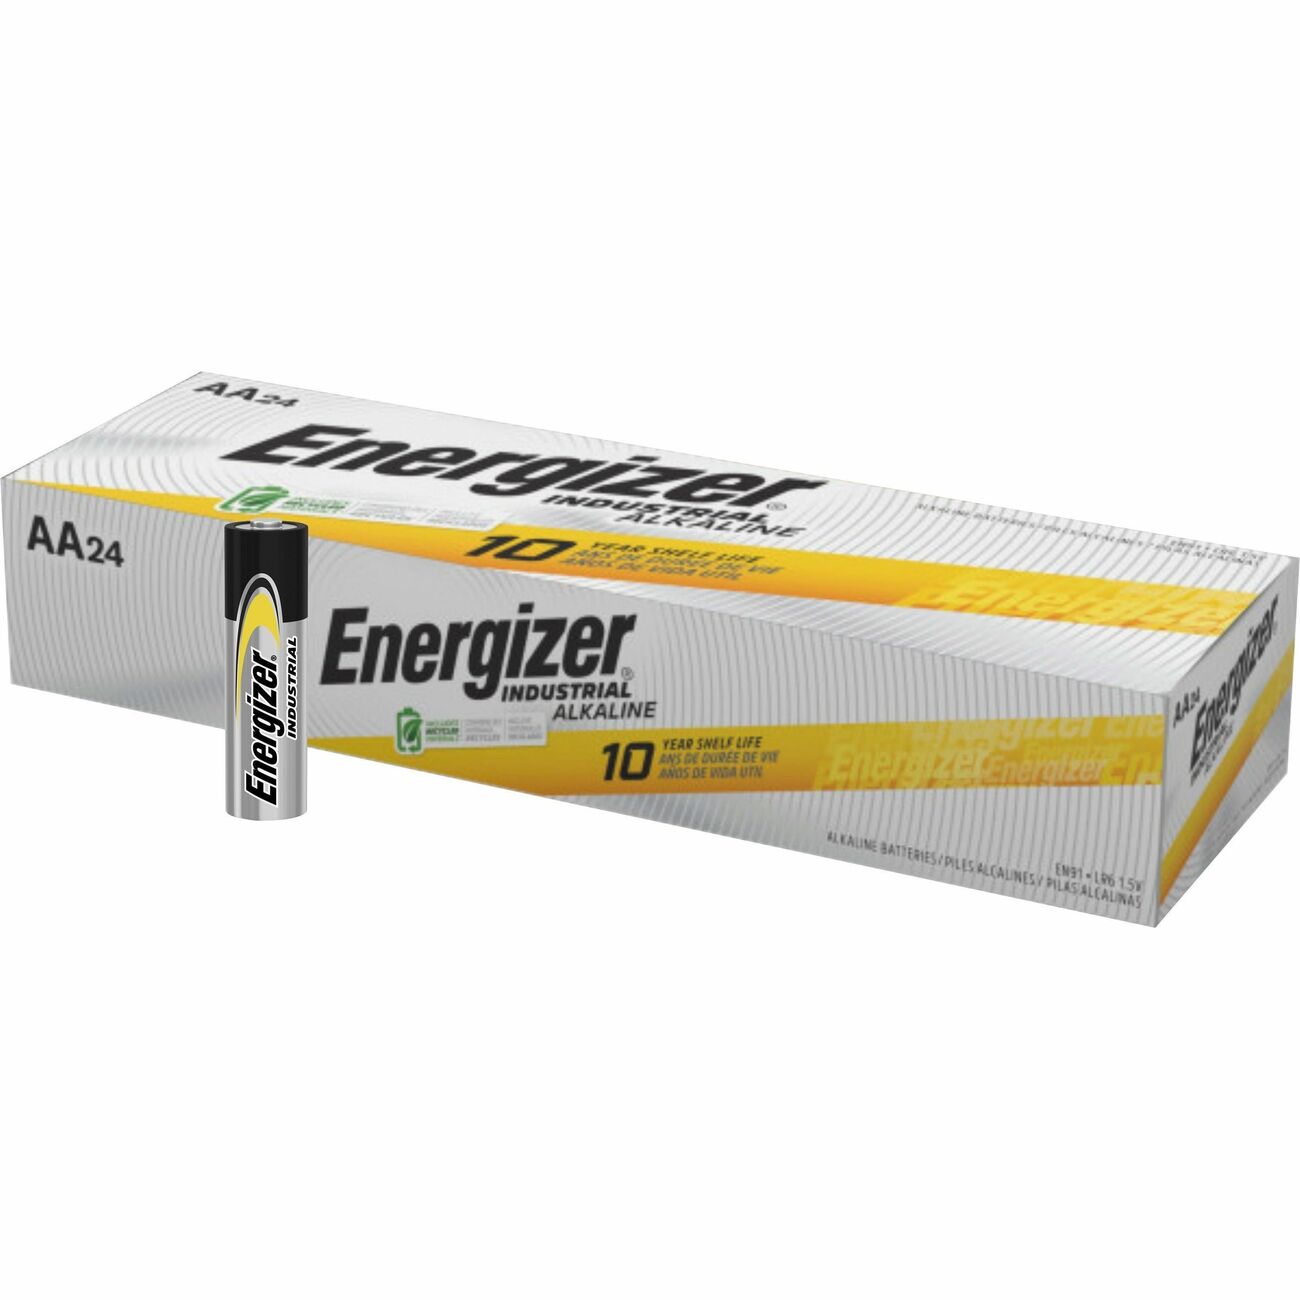 Industrial Alkaline Batteries